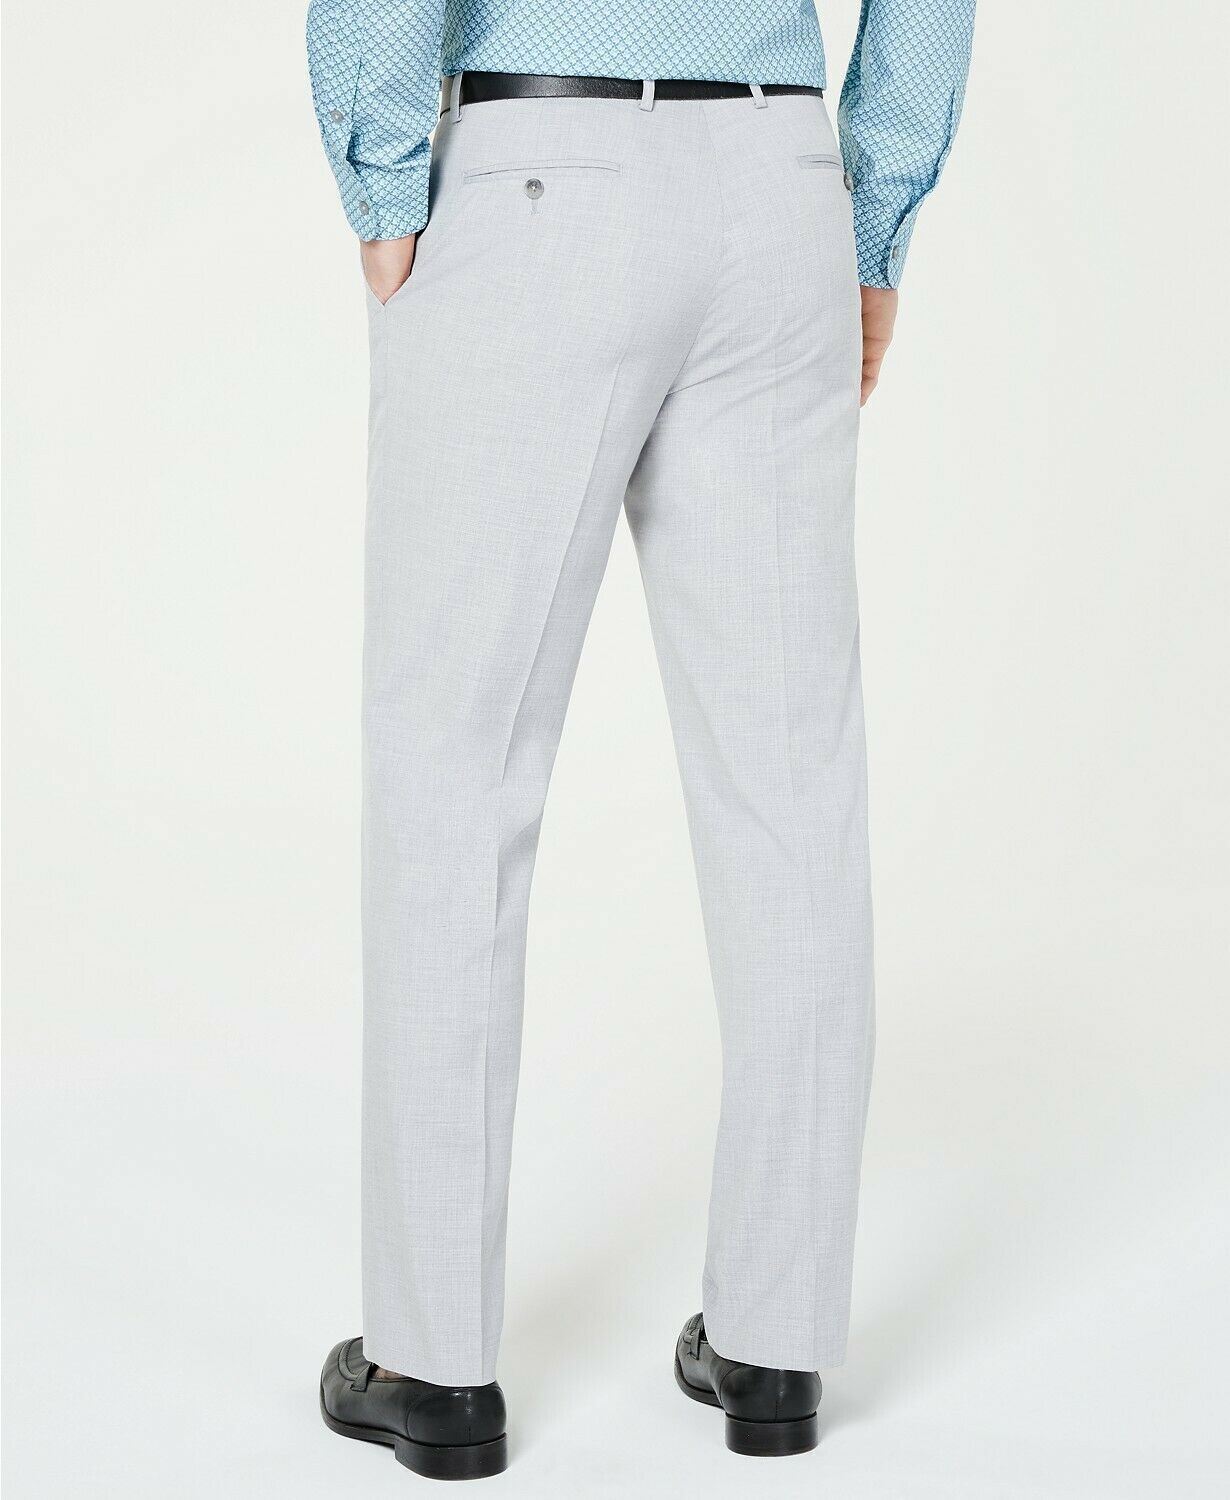 Alfani Slim-Fit Performance Stretch Light Grey Dress Pants 30 x 32